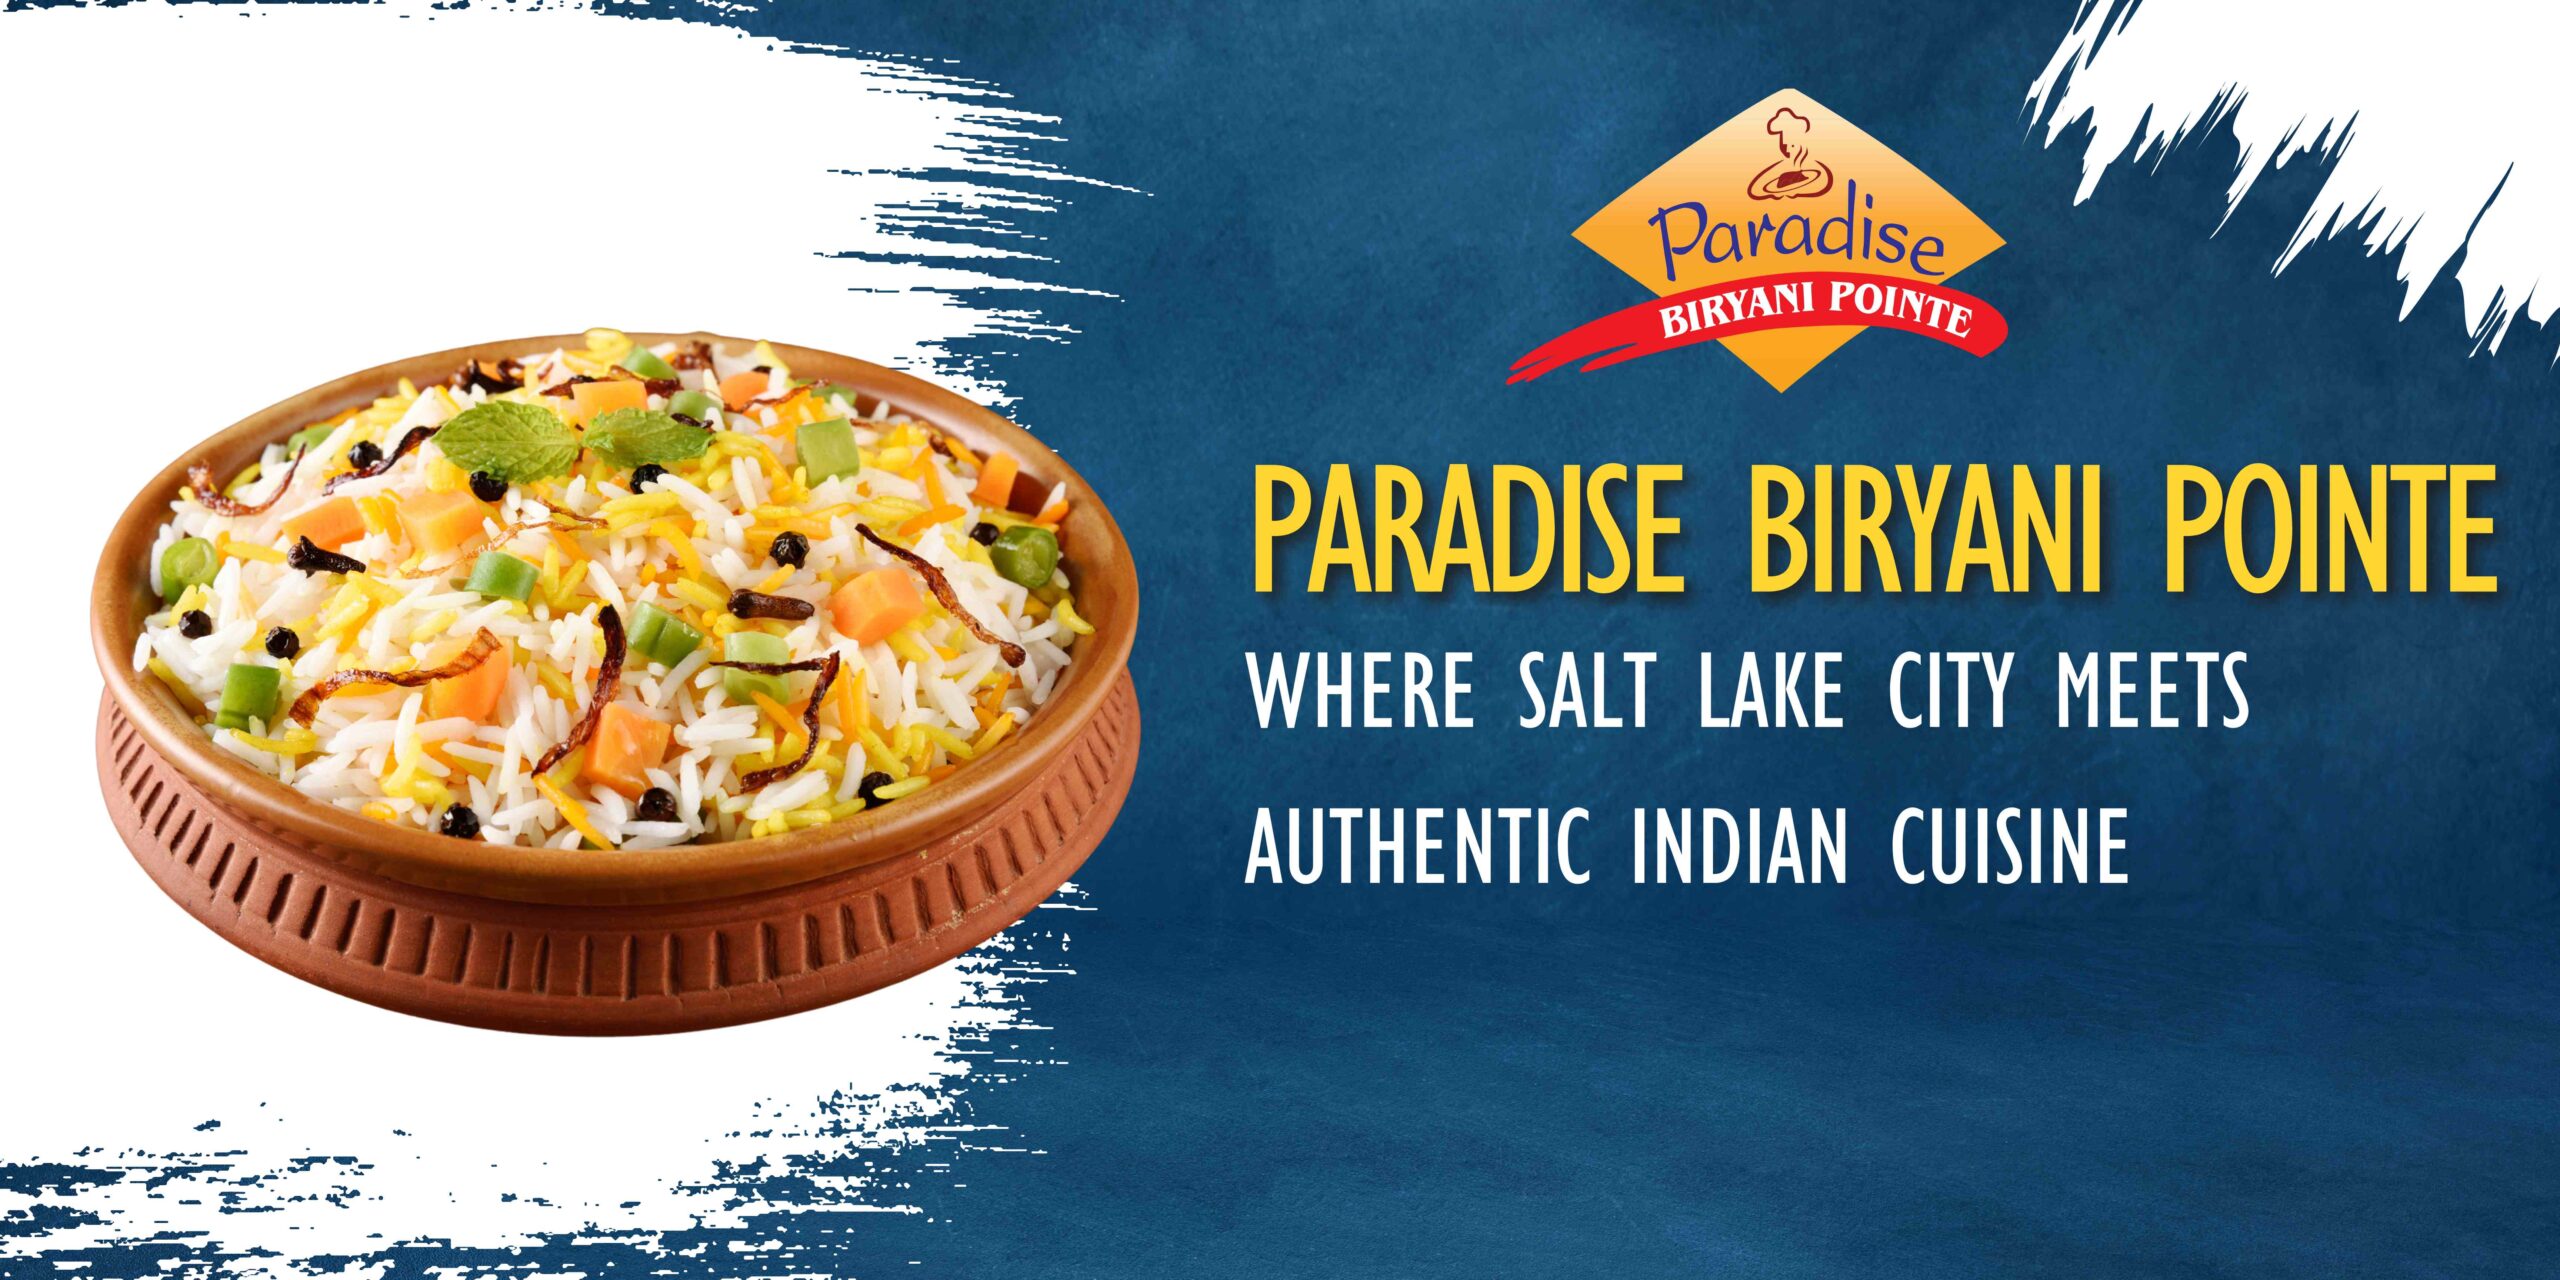 Paradise Biryani Pointe: Where Salt Lake City Meets Authentic Indian Cuisine